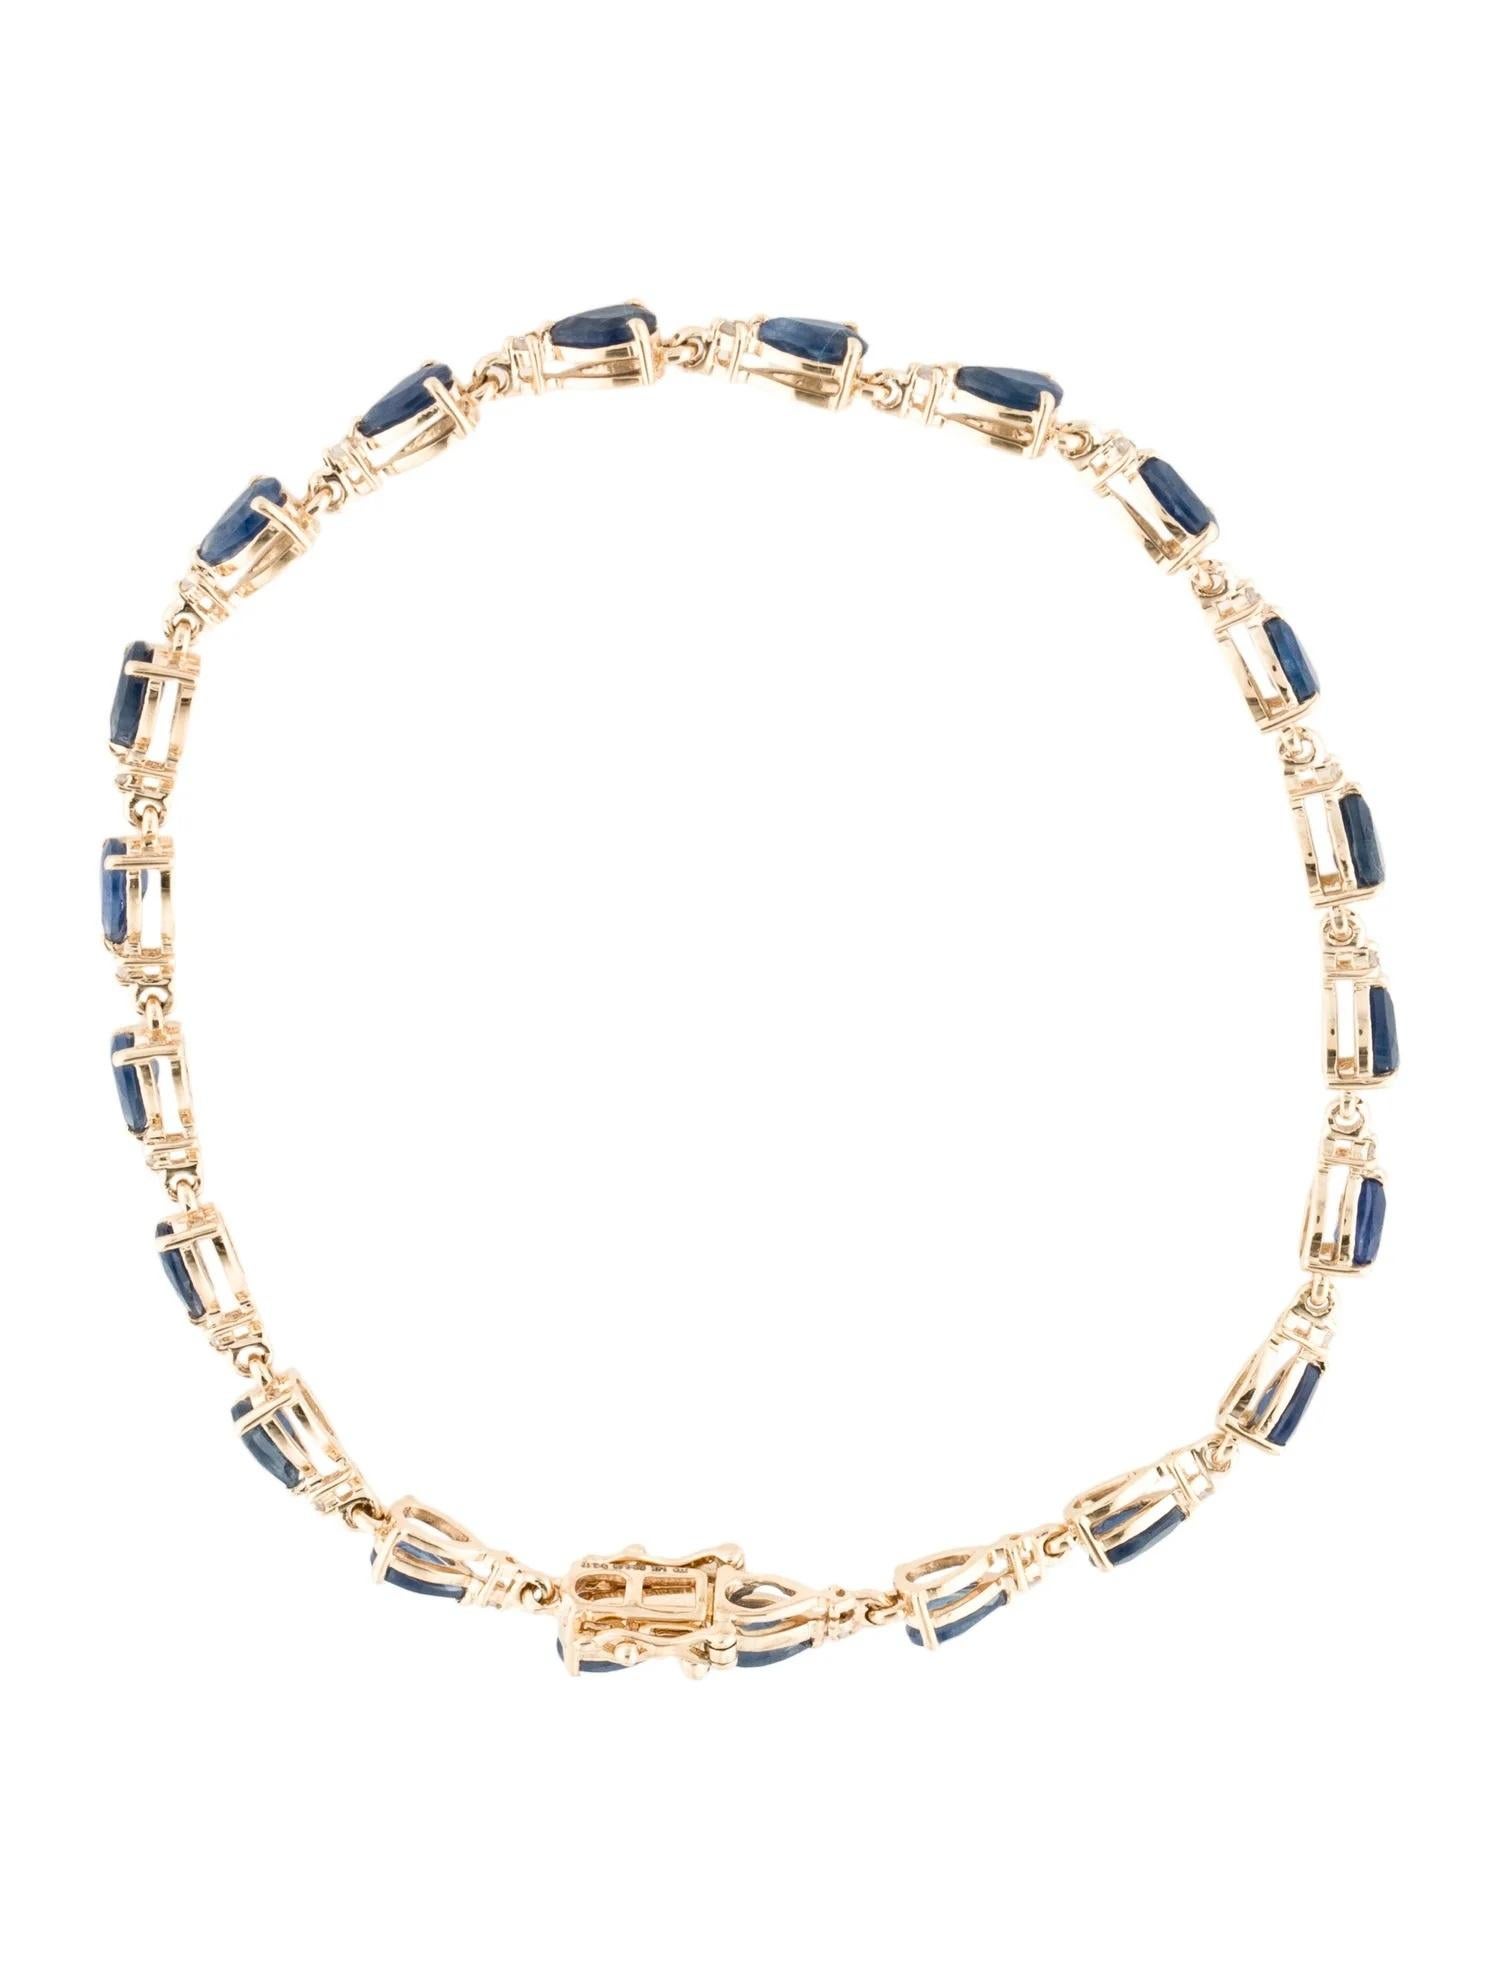 Artist 14K 5.63ctw Sapphire & Diamond Link Bracelet  Faceted Pear Shaped Sapphire  Ye For Sale